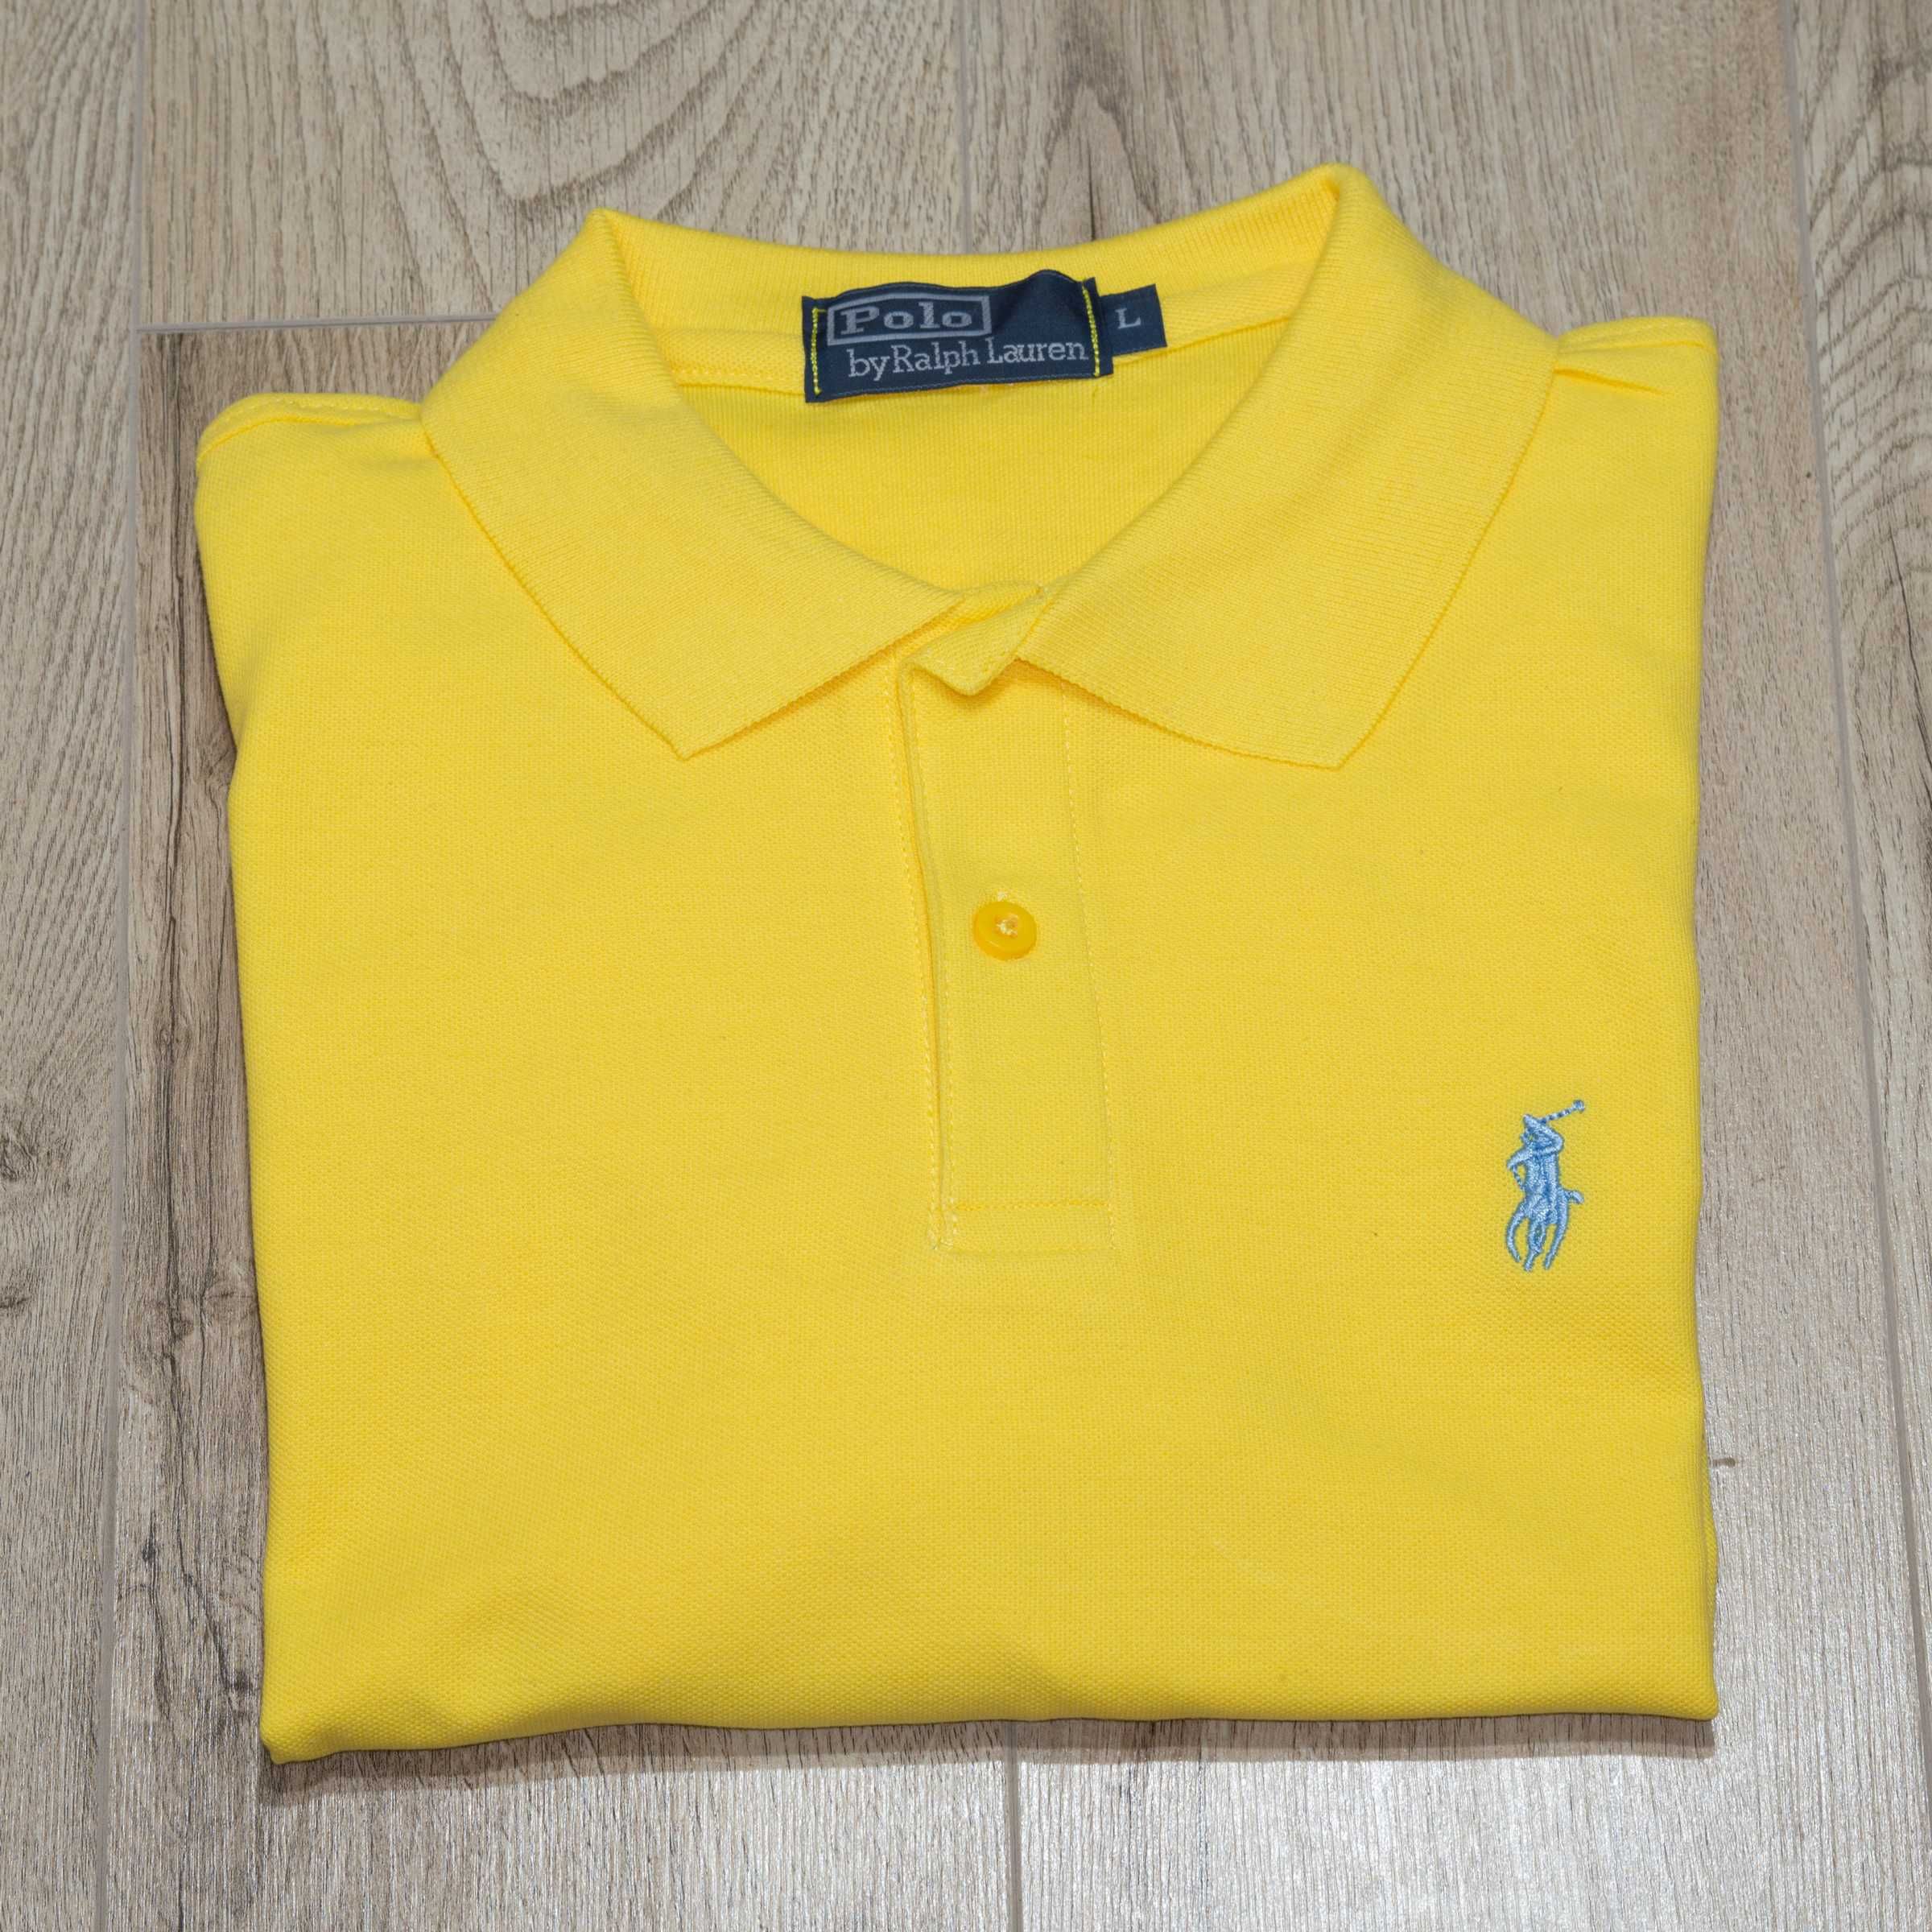 Tricouri Polo Ralph Lauren S,M,L,XL,XXL 18 culori